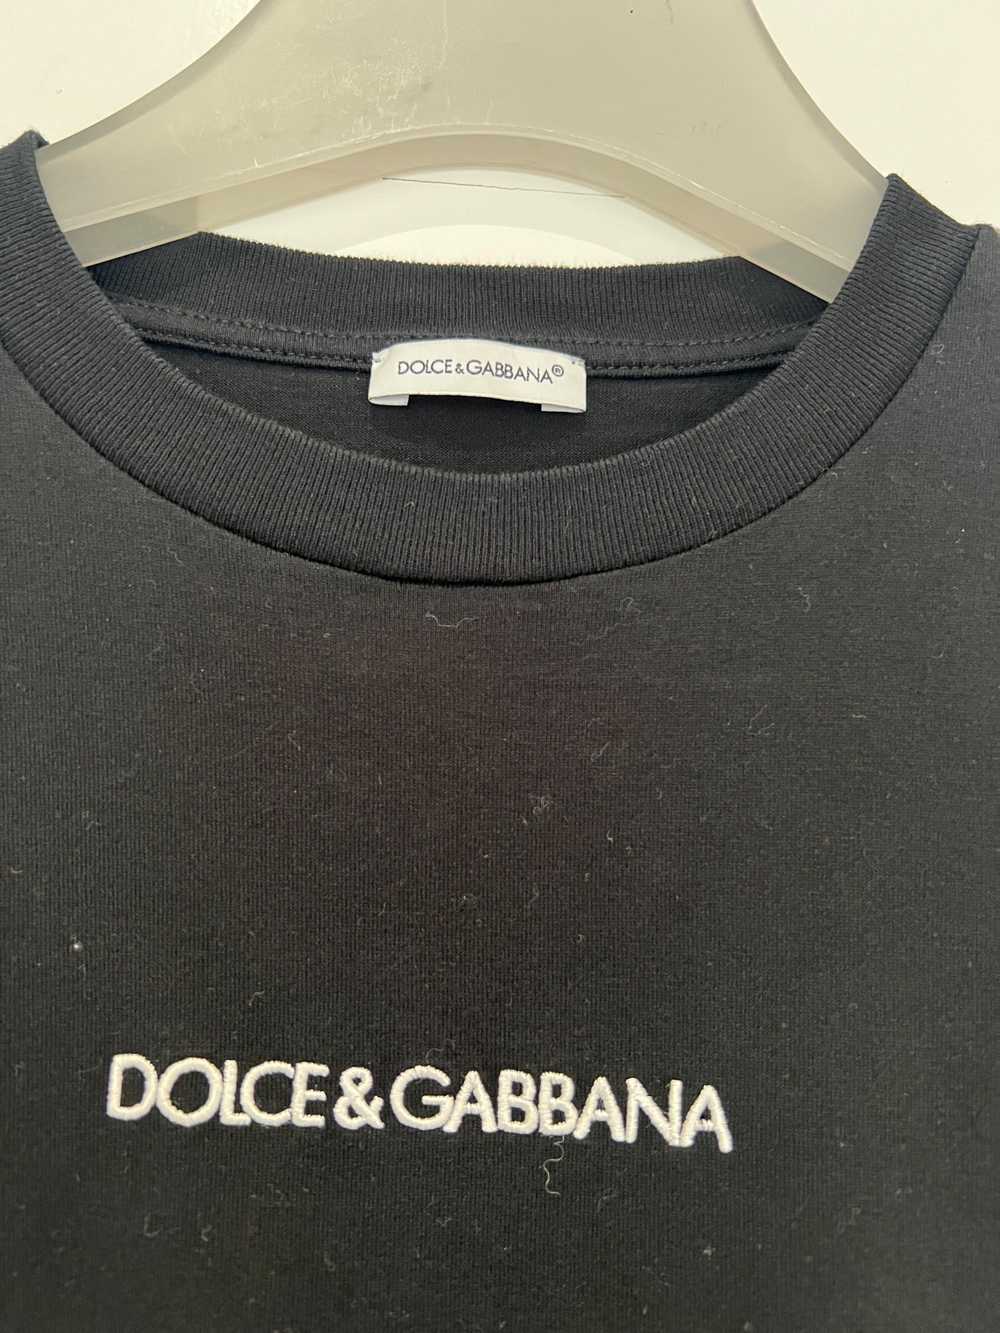 Product Details Dolce & Gabbana Kids Black T-Shirt - image 3